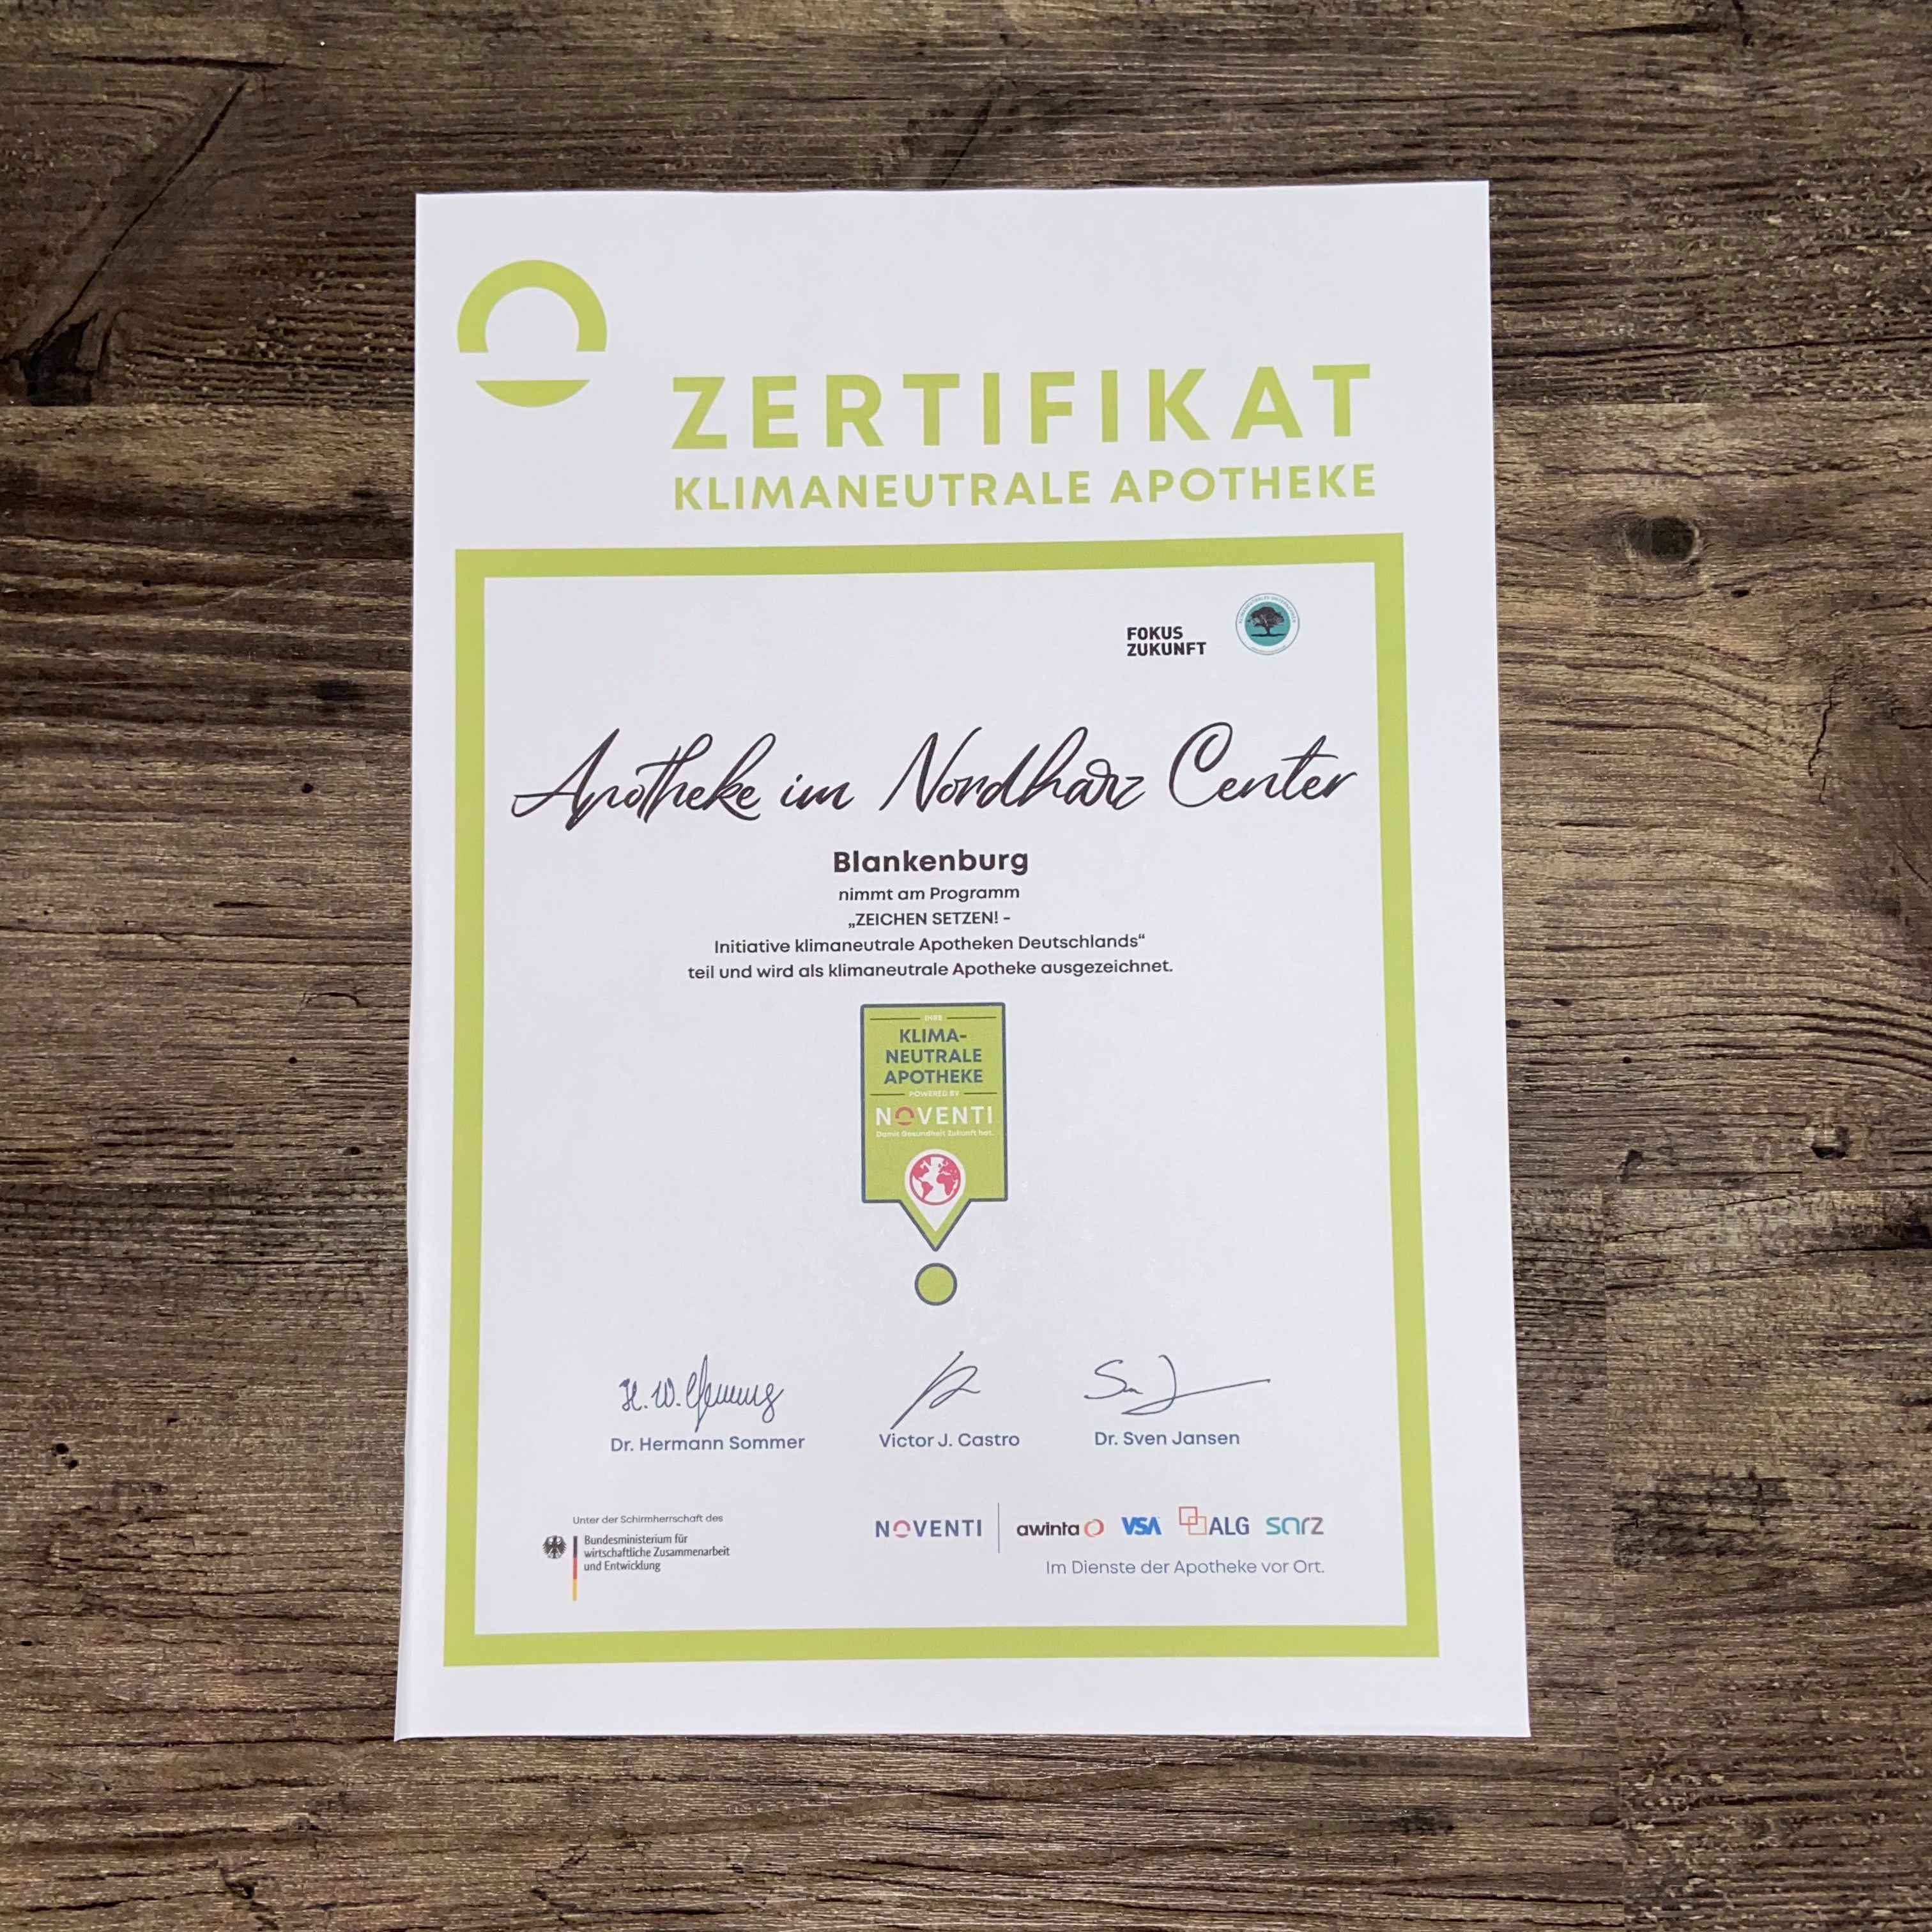 Zertifikat der Apotheke im Nordharz Center als klimaneutrale Apotheke